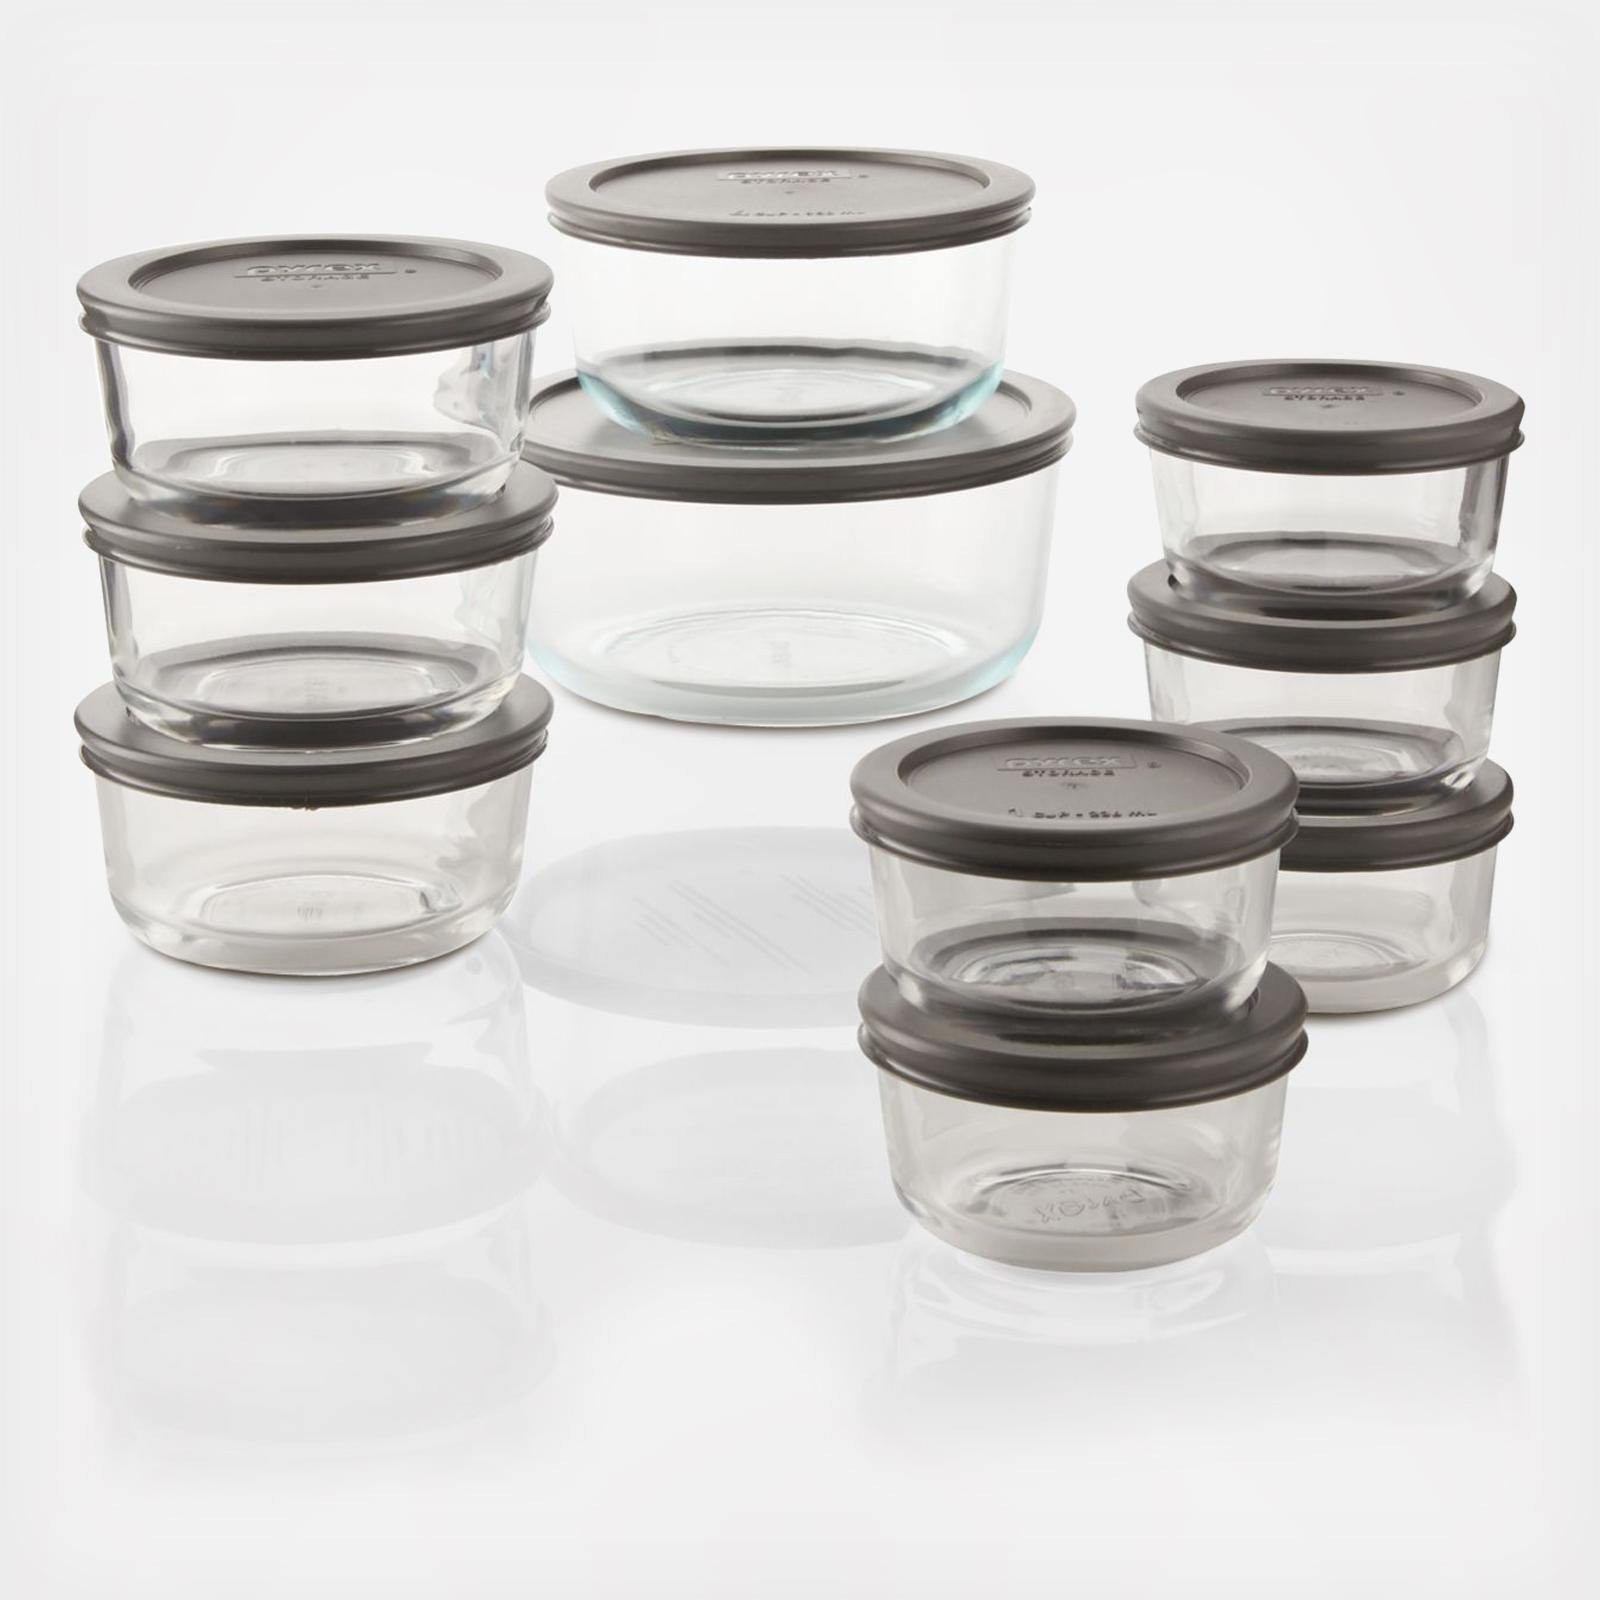 Pyrex 16 Piece Simply Store Nesting Glass Food Storage Set